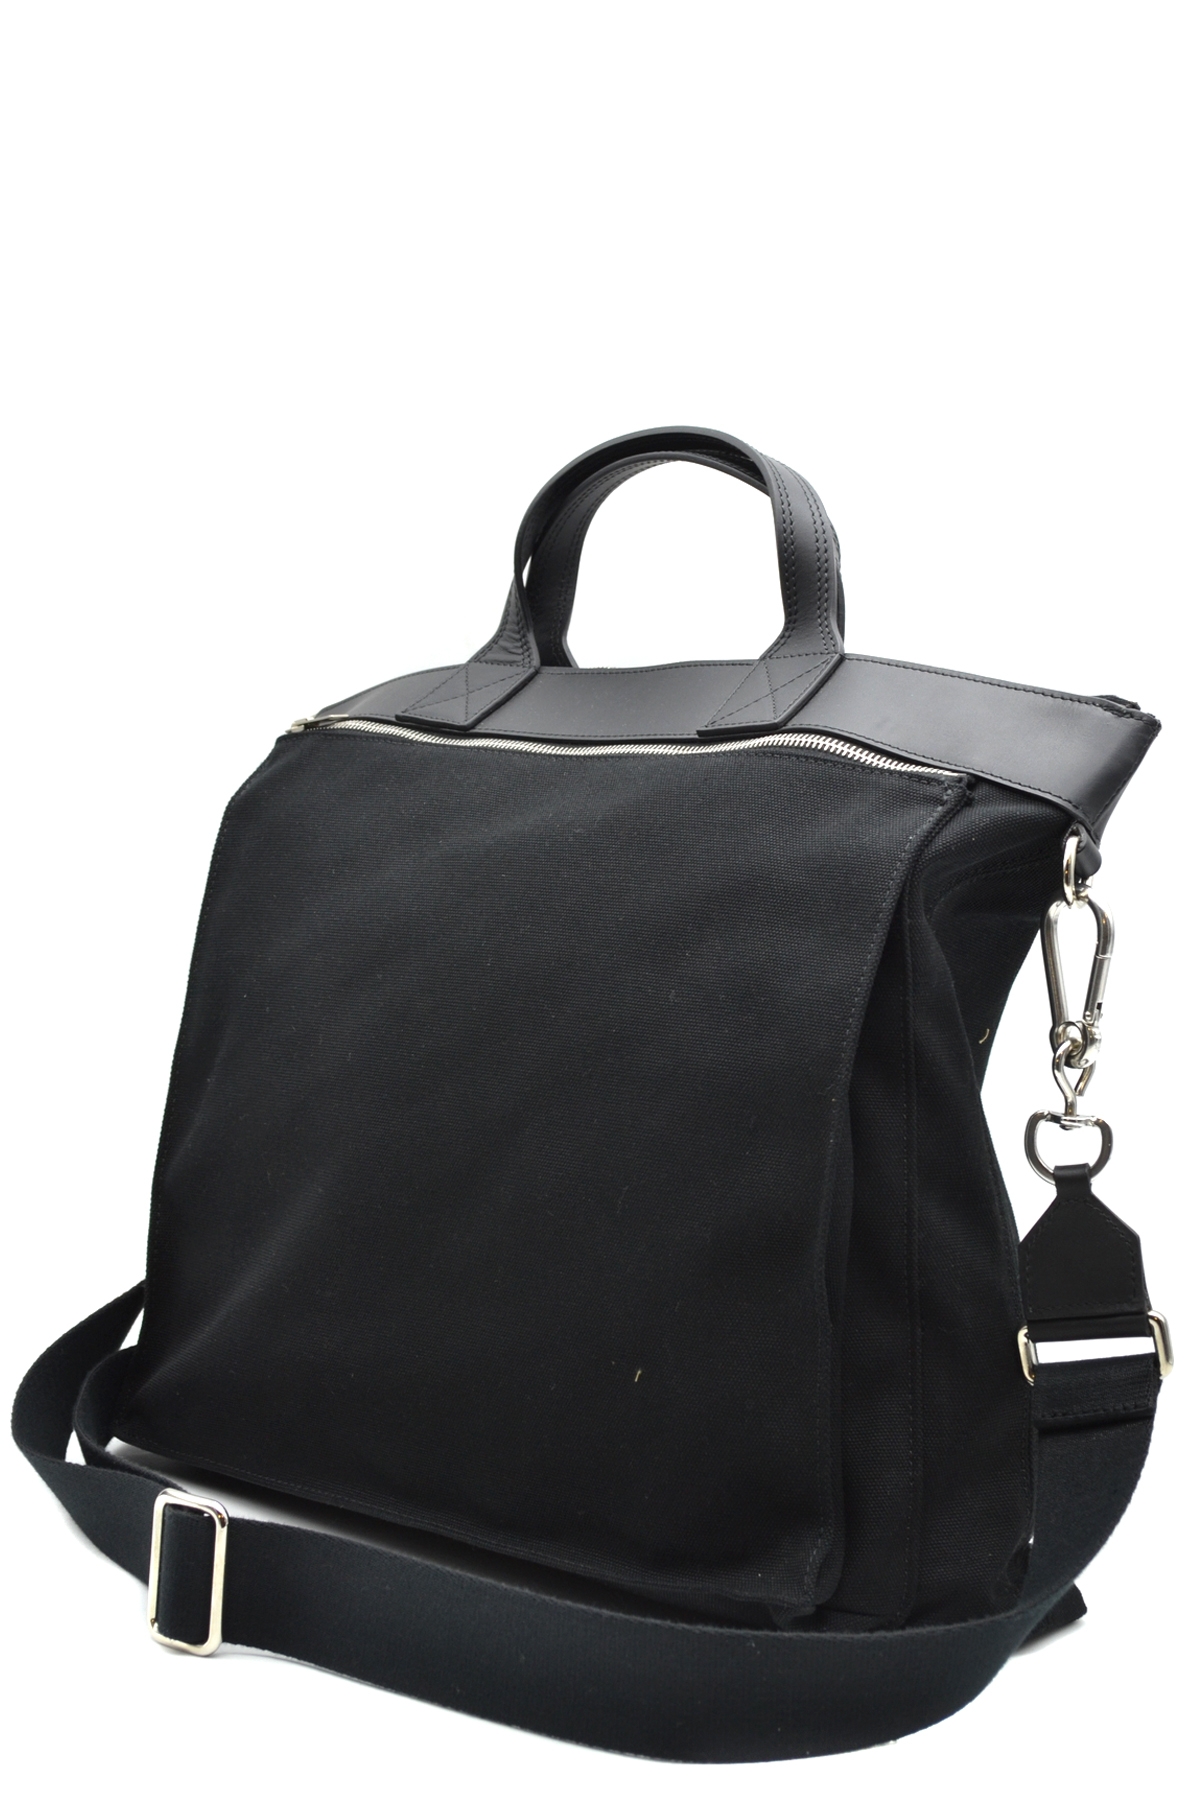 GOLDEN GOOSE DELUXE BRAND Men's Bags Handbag Black Leather NIB